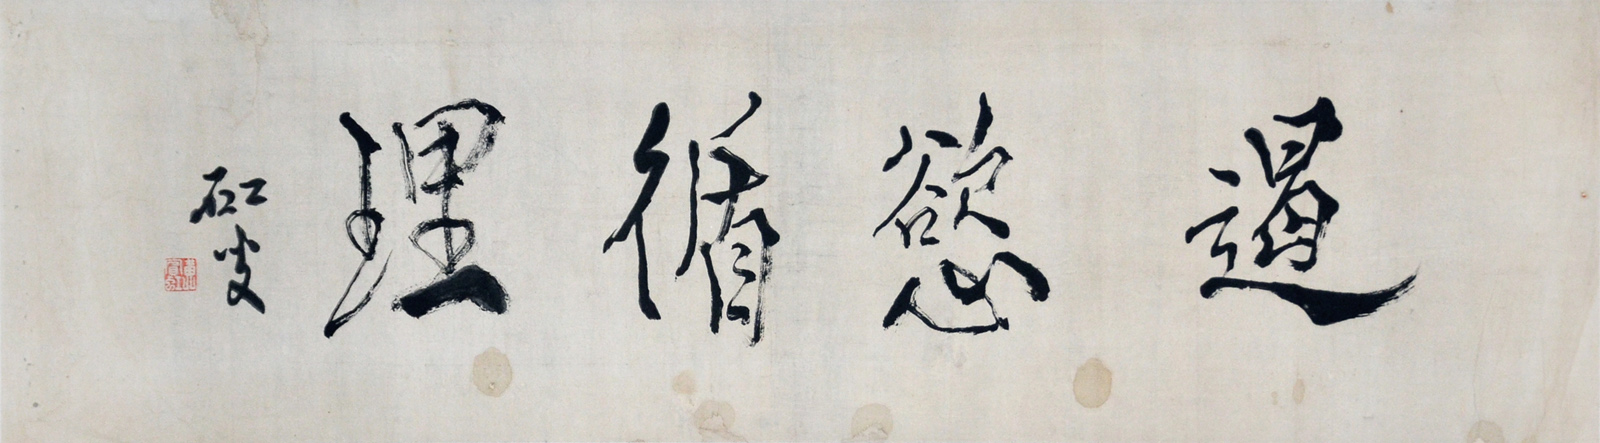 ??? (1865 - 1955) ?????? Huang Binhong Calligraphy ???(1865 - 1955)??????????????:???? ????:(???)